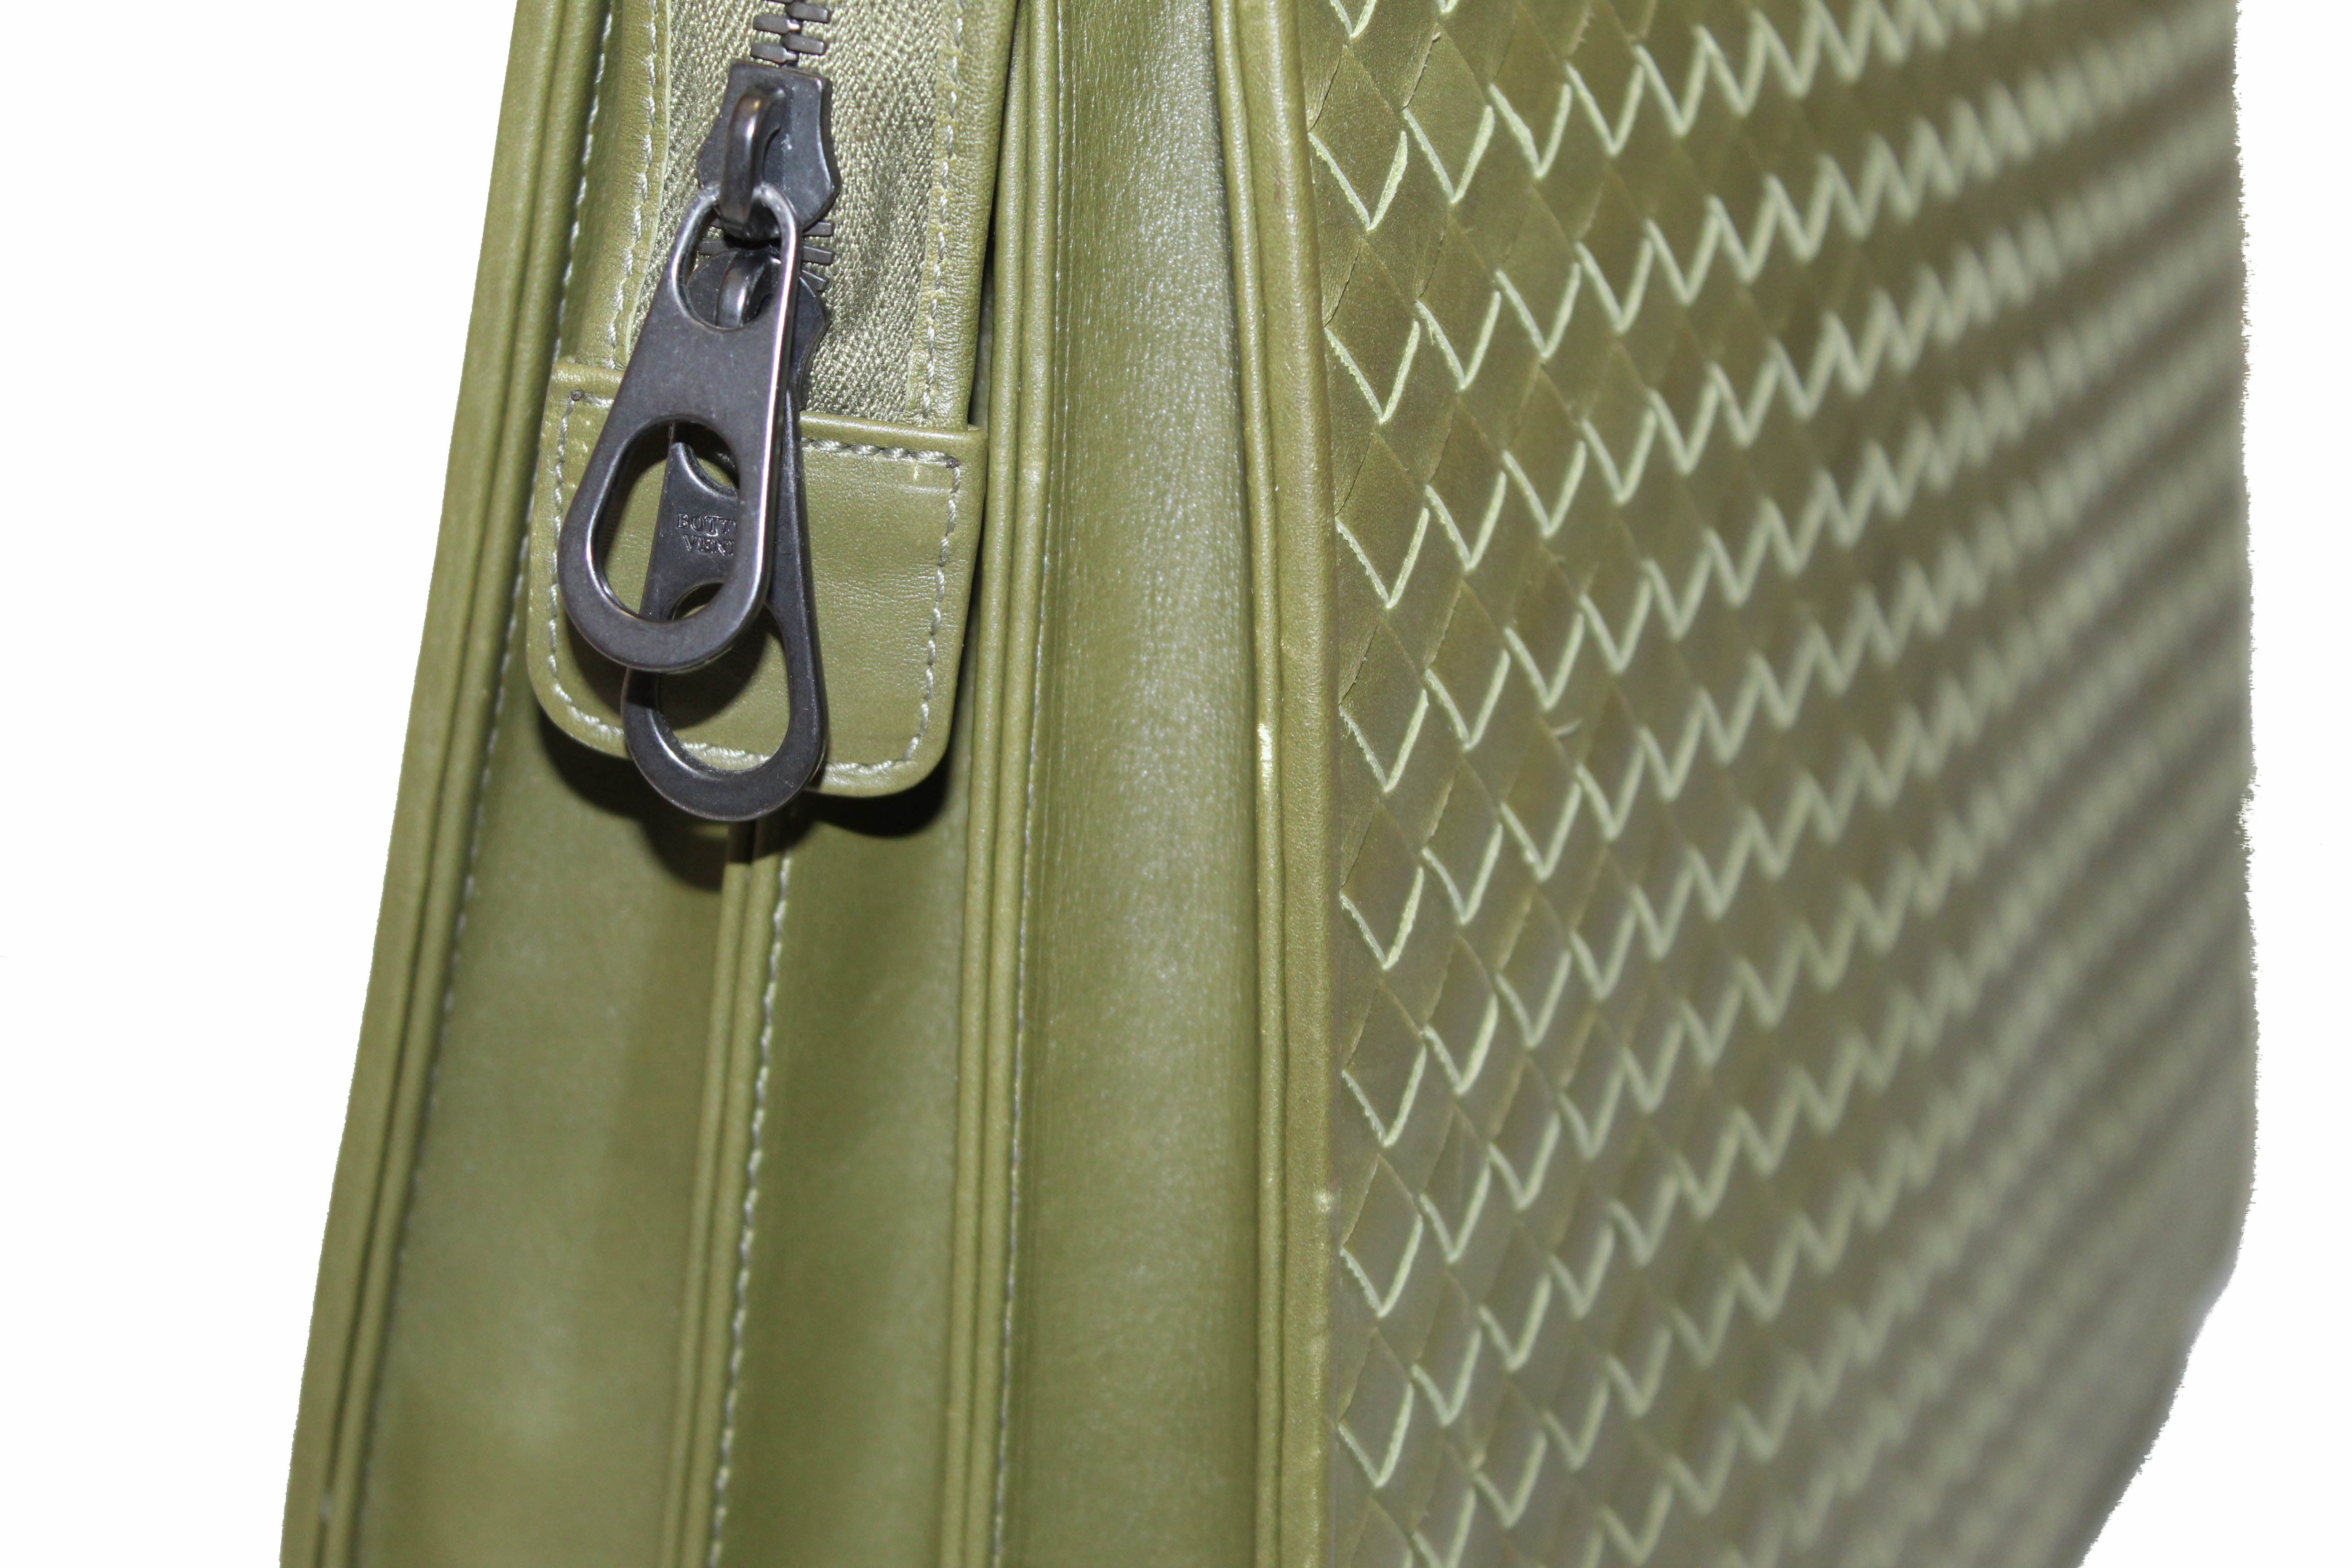 Authentic Bottega Veneta Green Intrecciato Calfskin Leather Briefcase